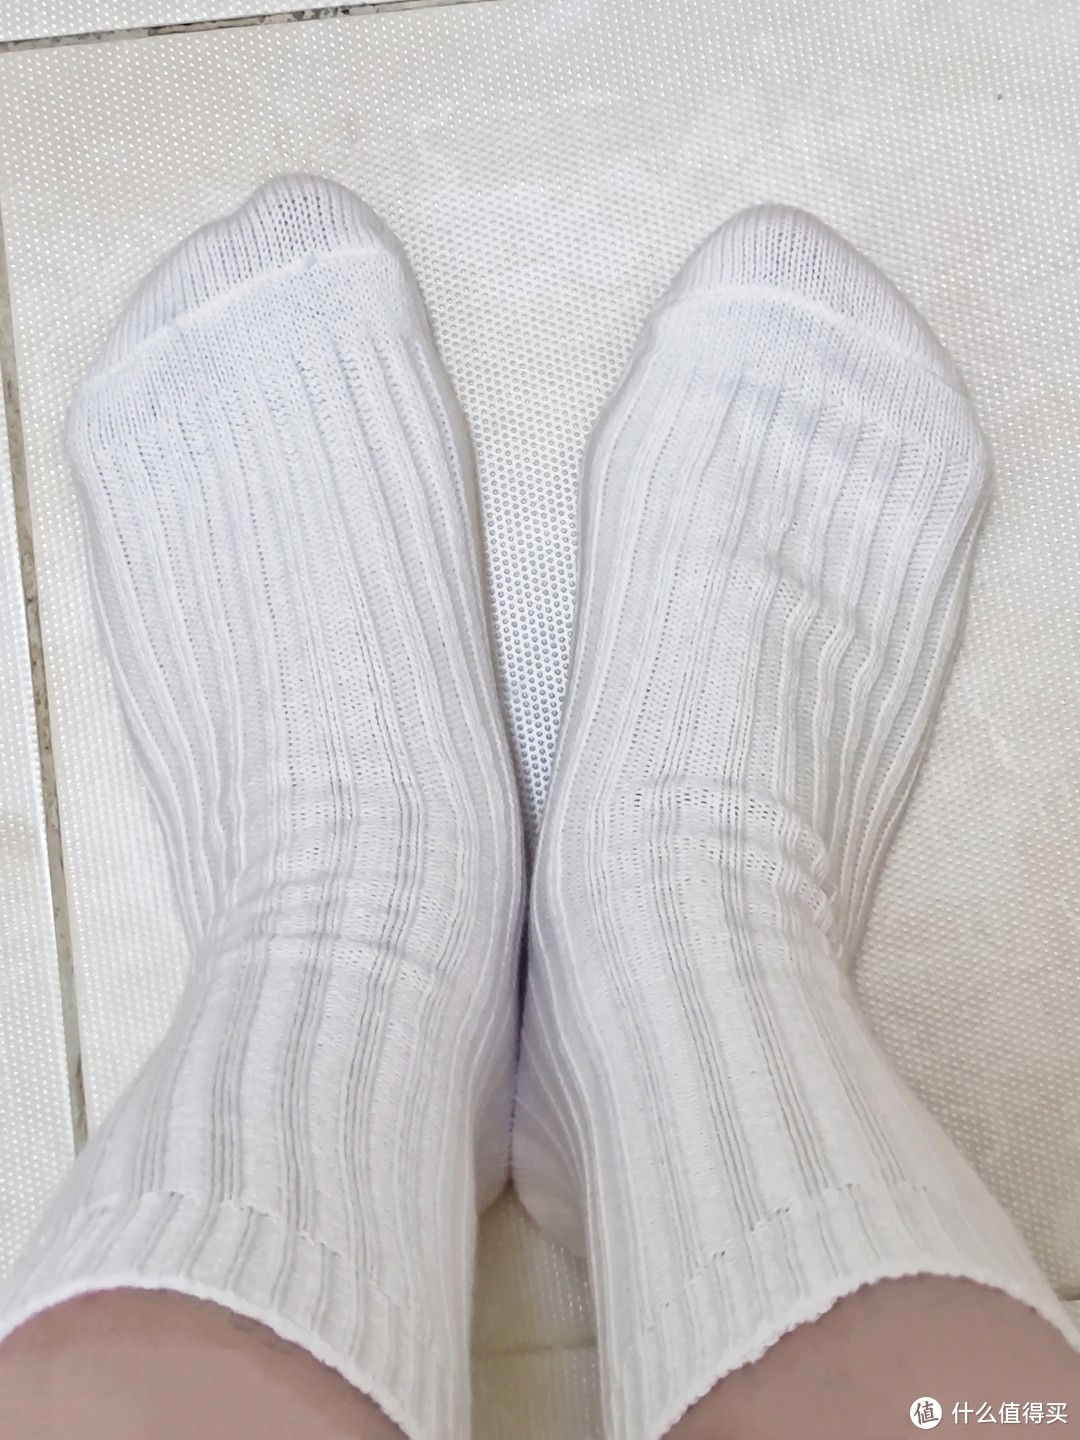 R标的白色袜子也太好看了！！